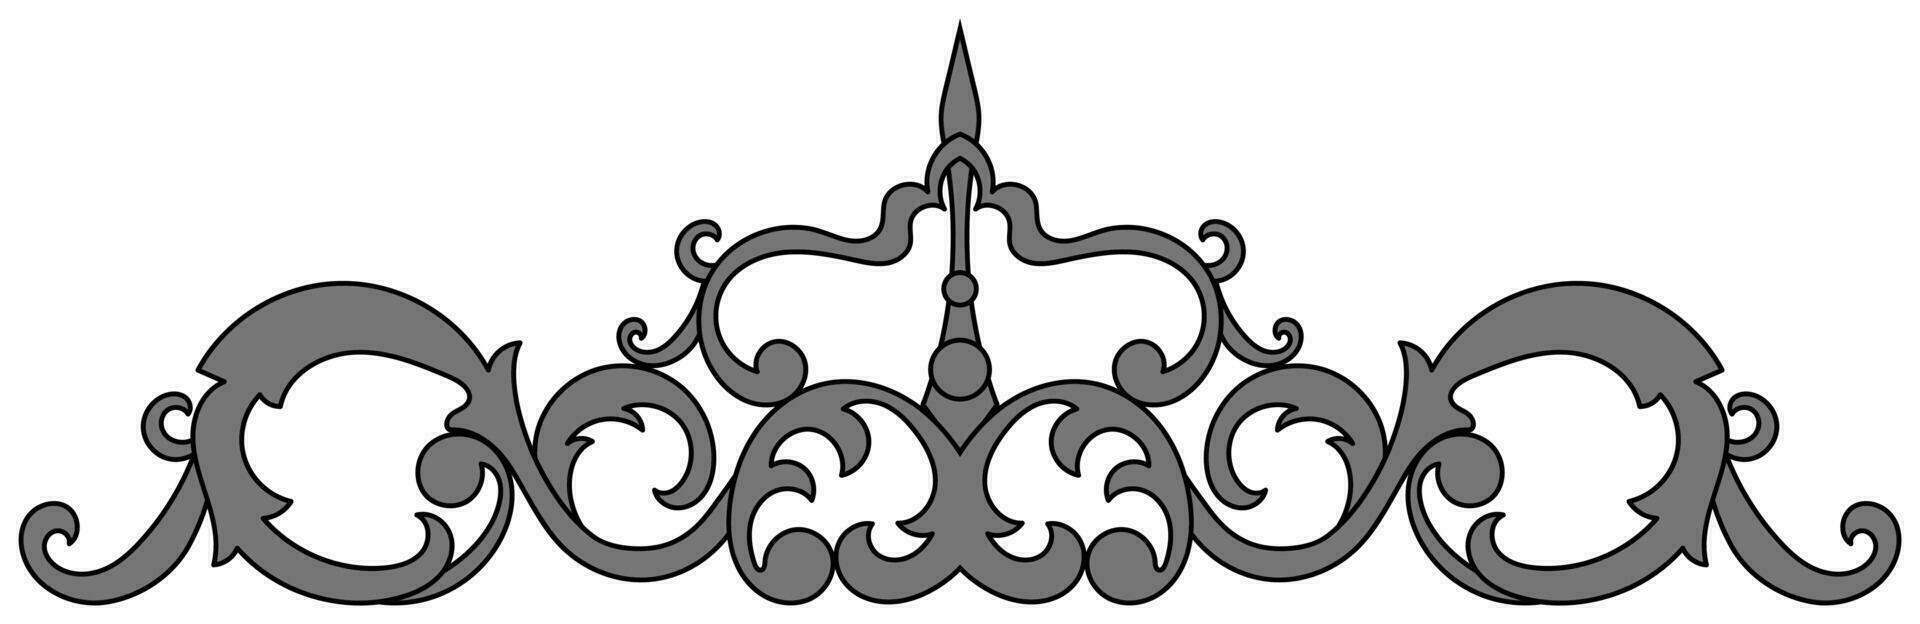 Vintage Baroque design pattern element engraving retro style vector